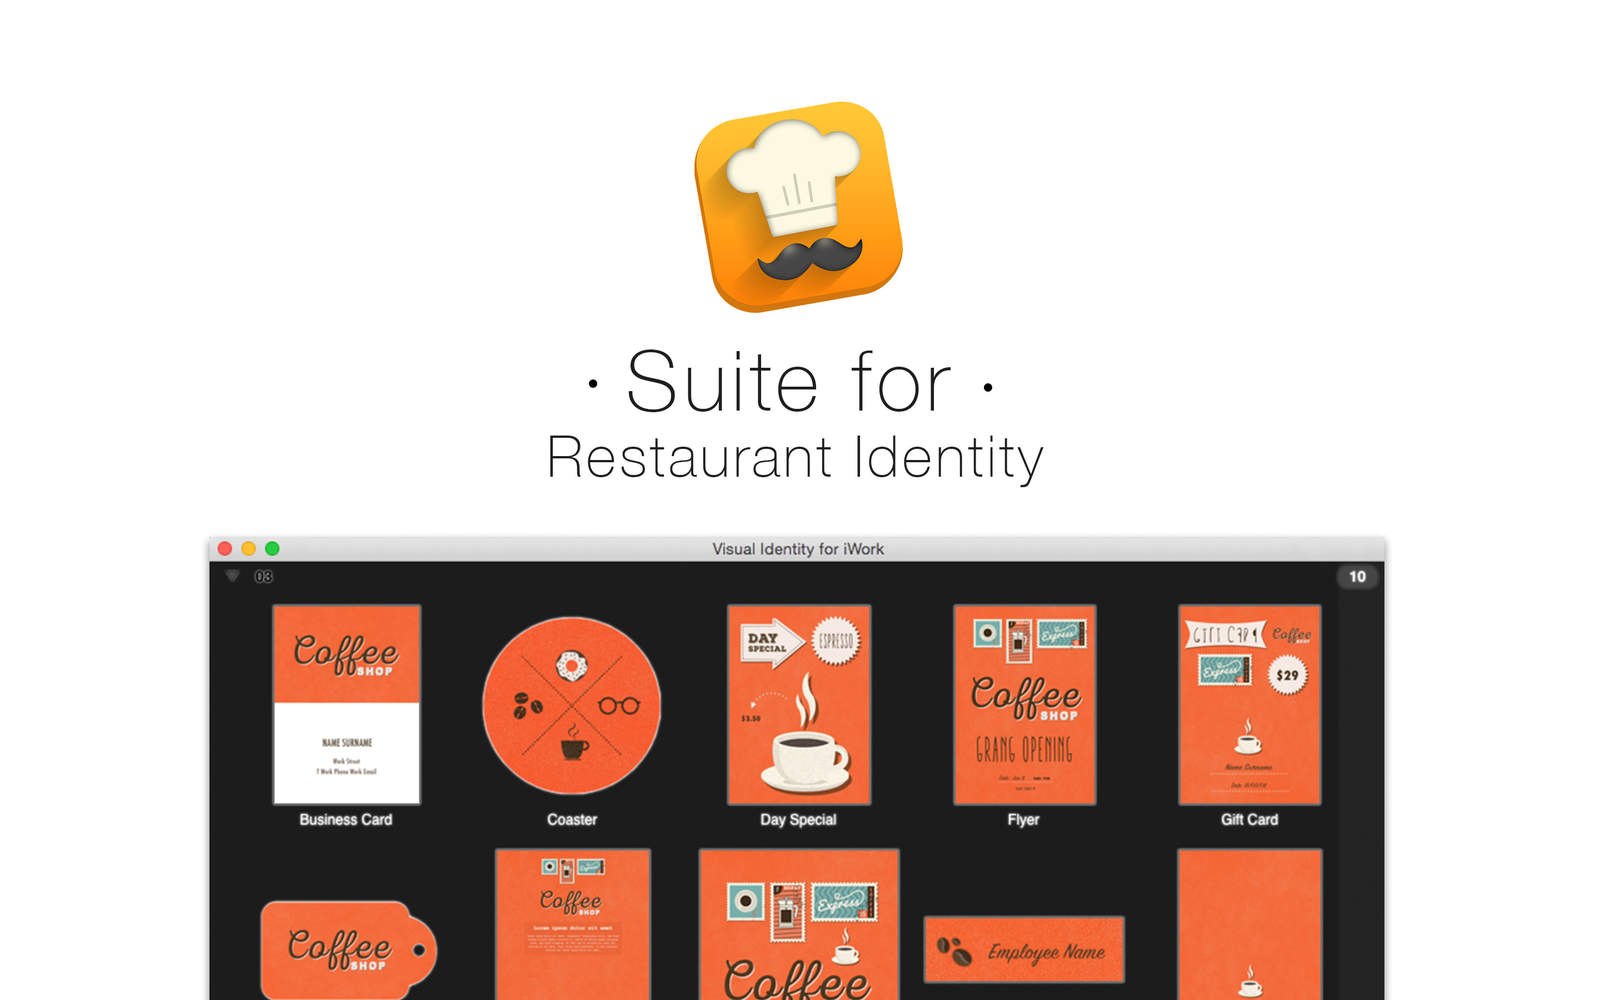 Suite for Restaurant Identity 1.1 : Main Window